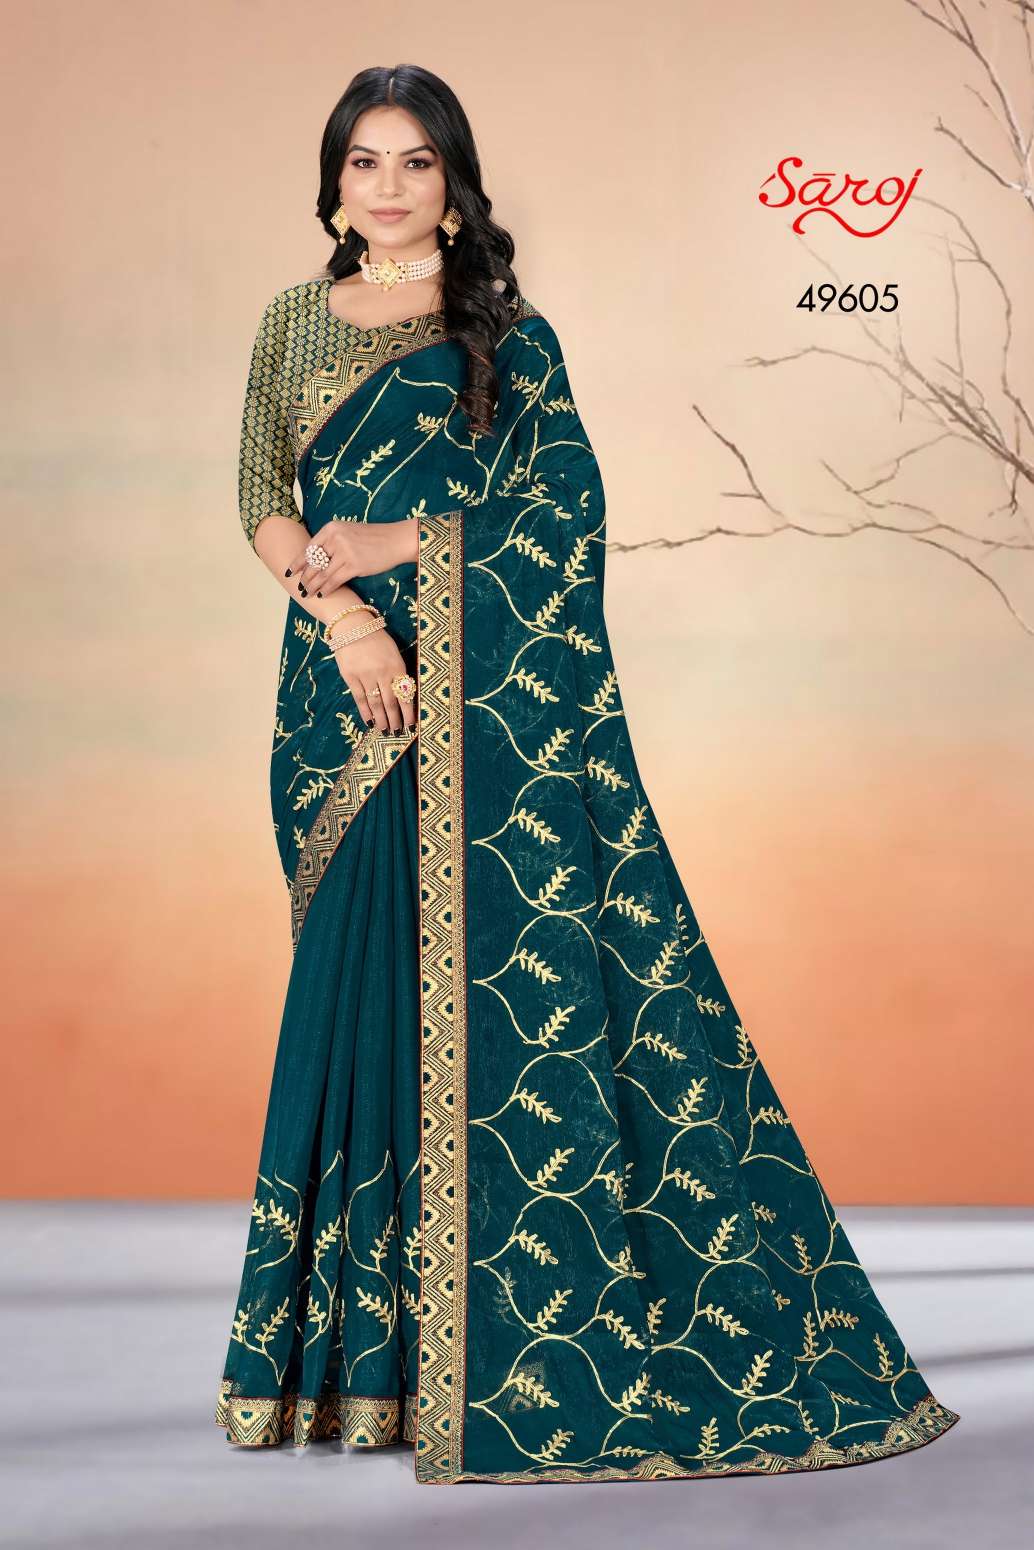 Saroj textile presents Jihaana casual sarees catalogue